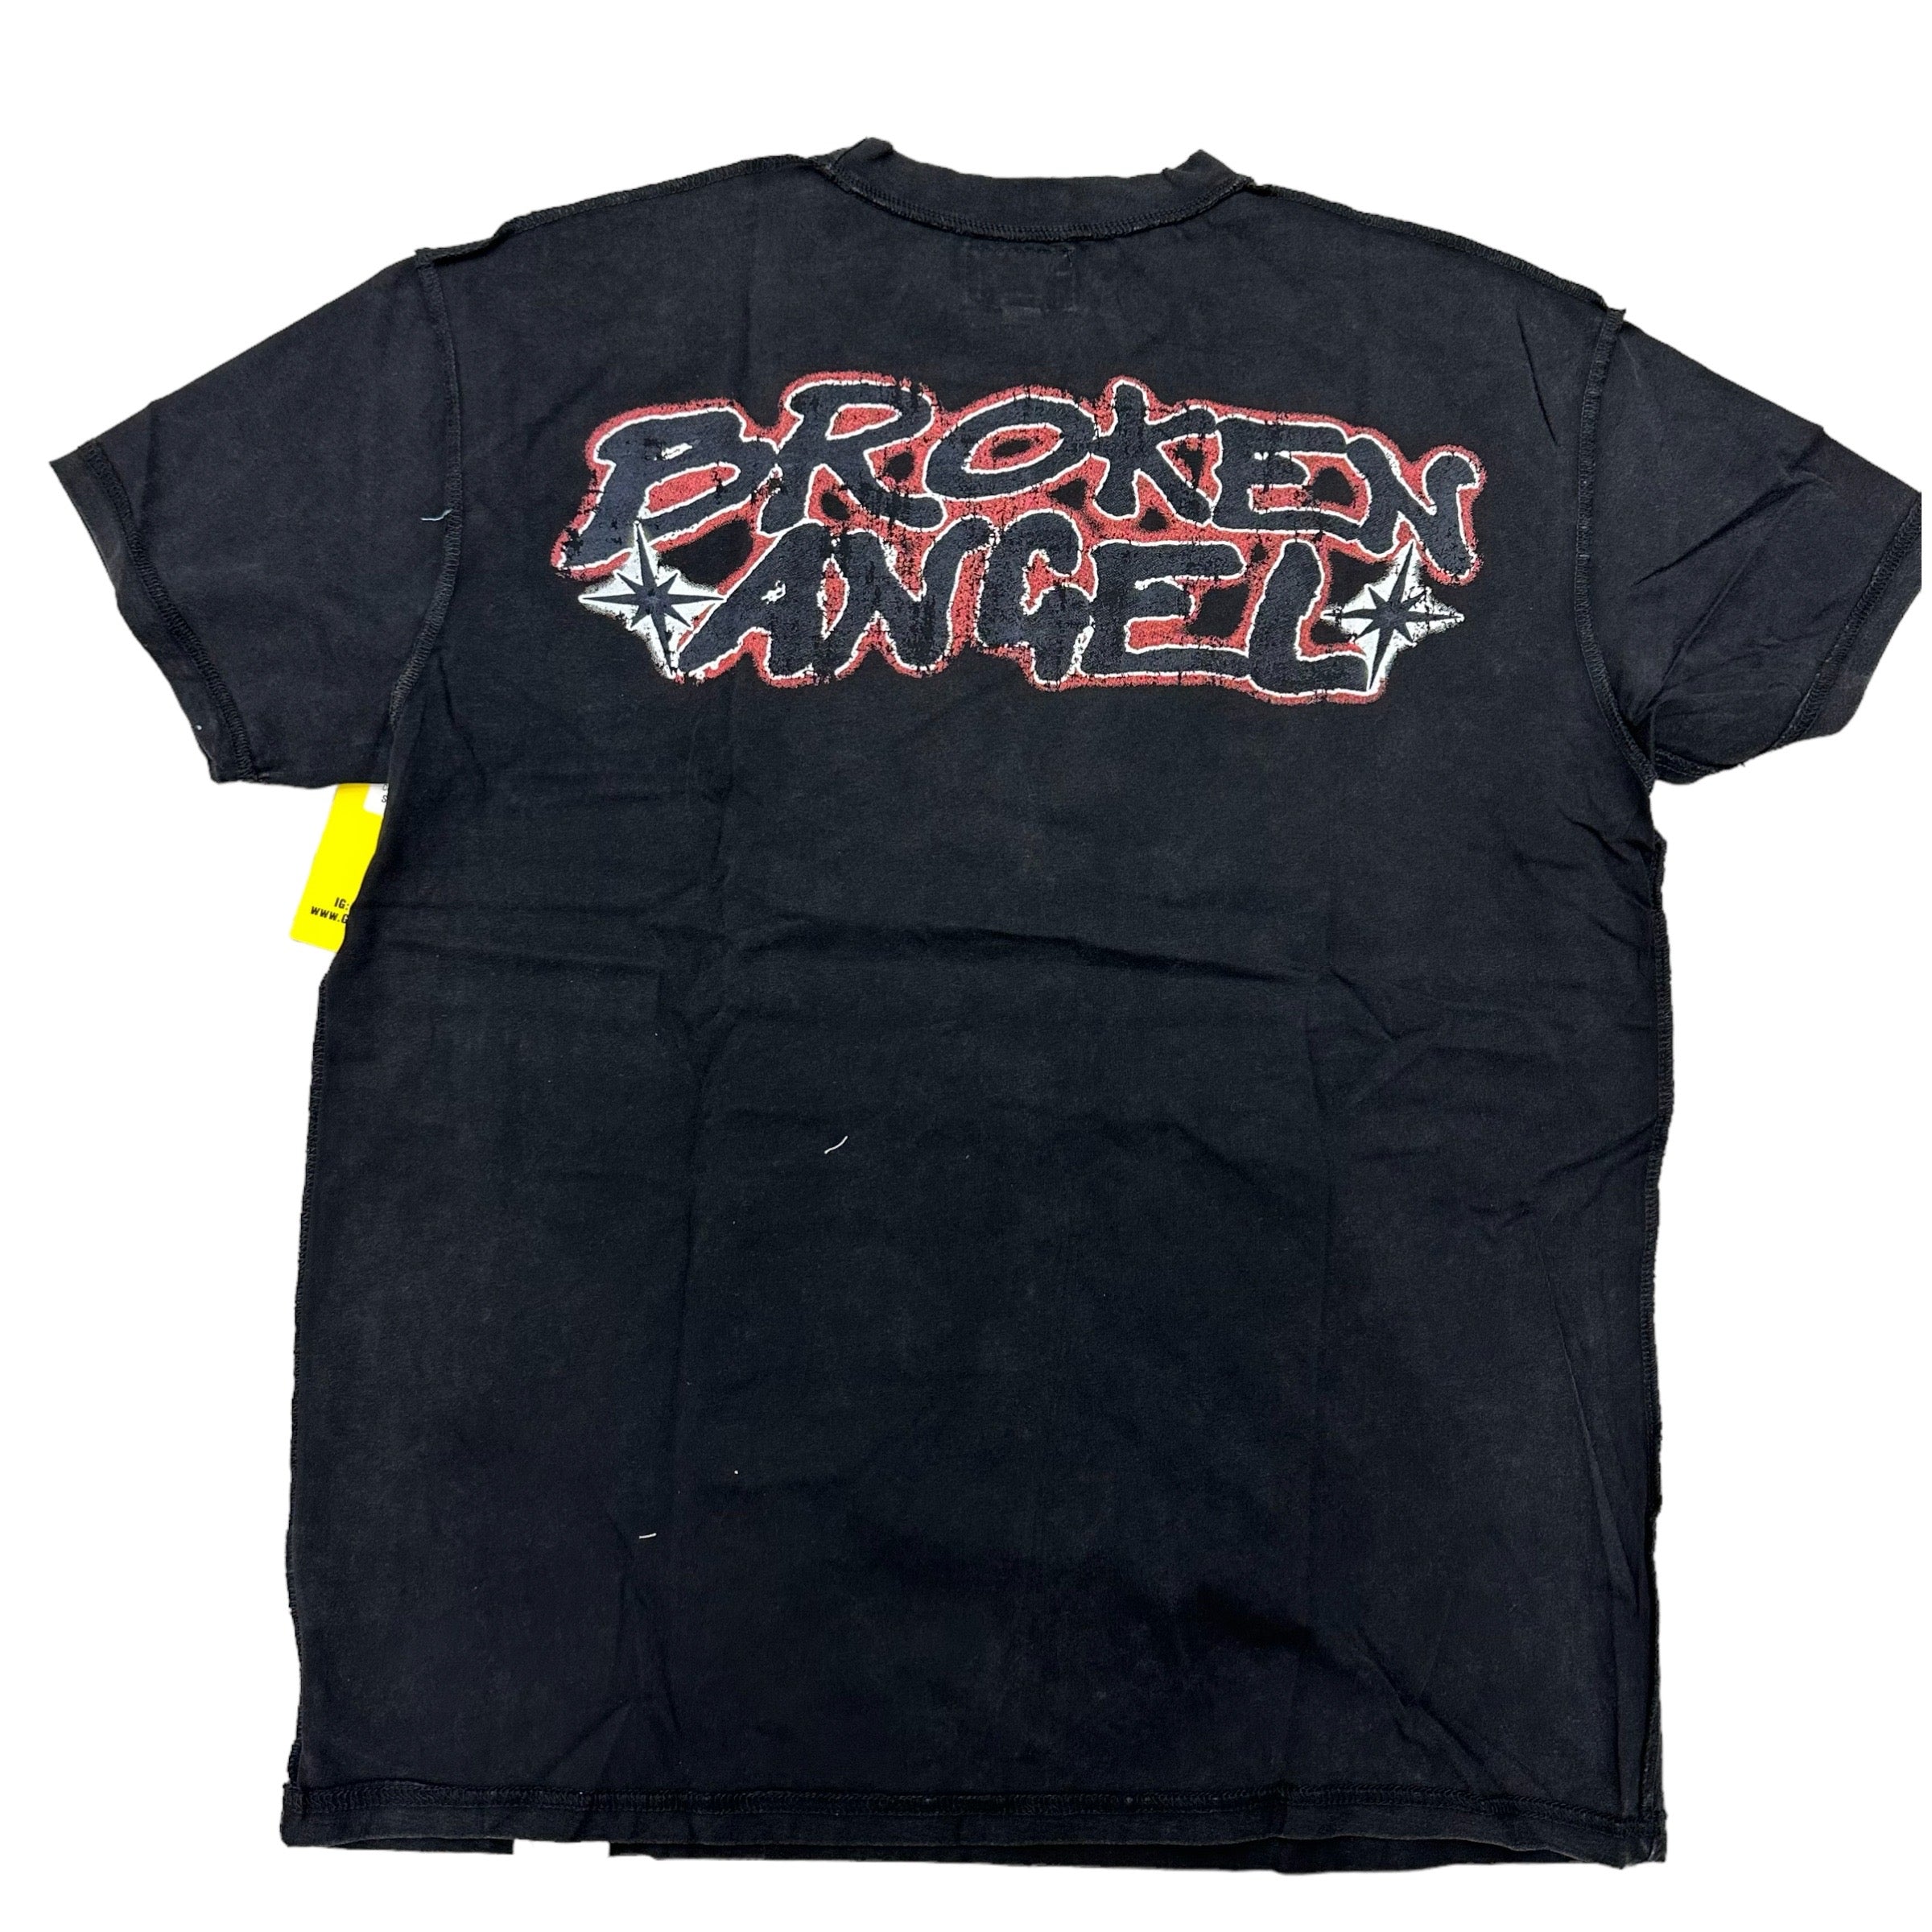 GFTD Broken Angel OverSize T-shirt Black